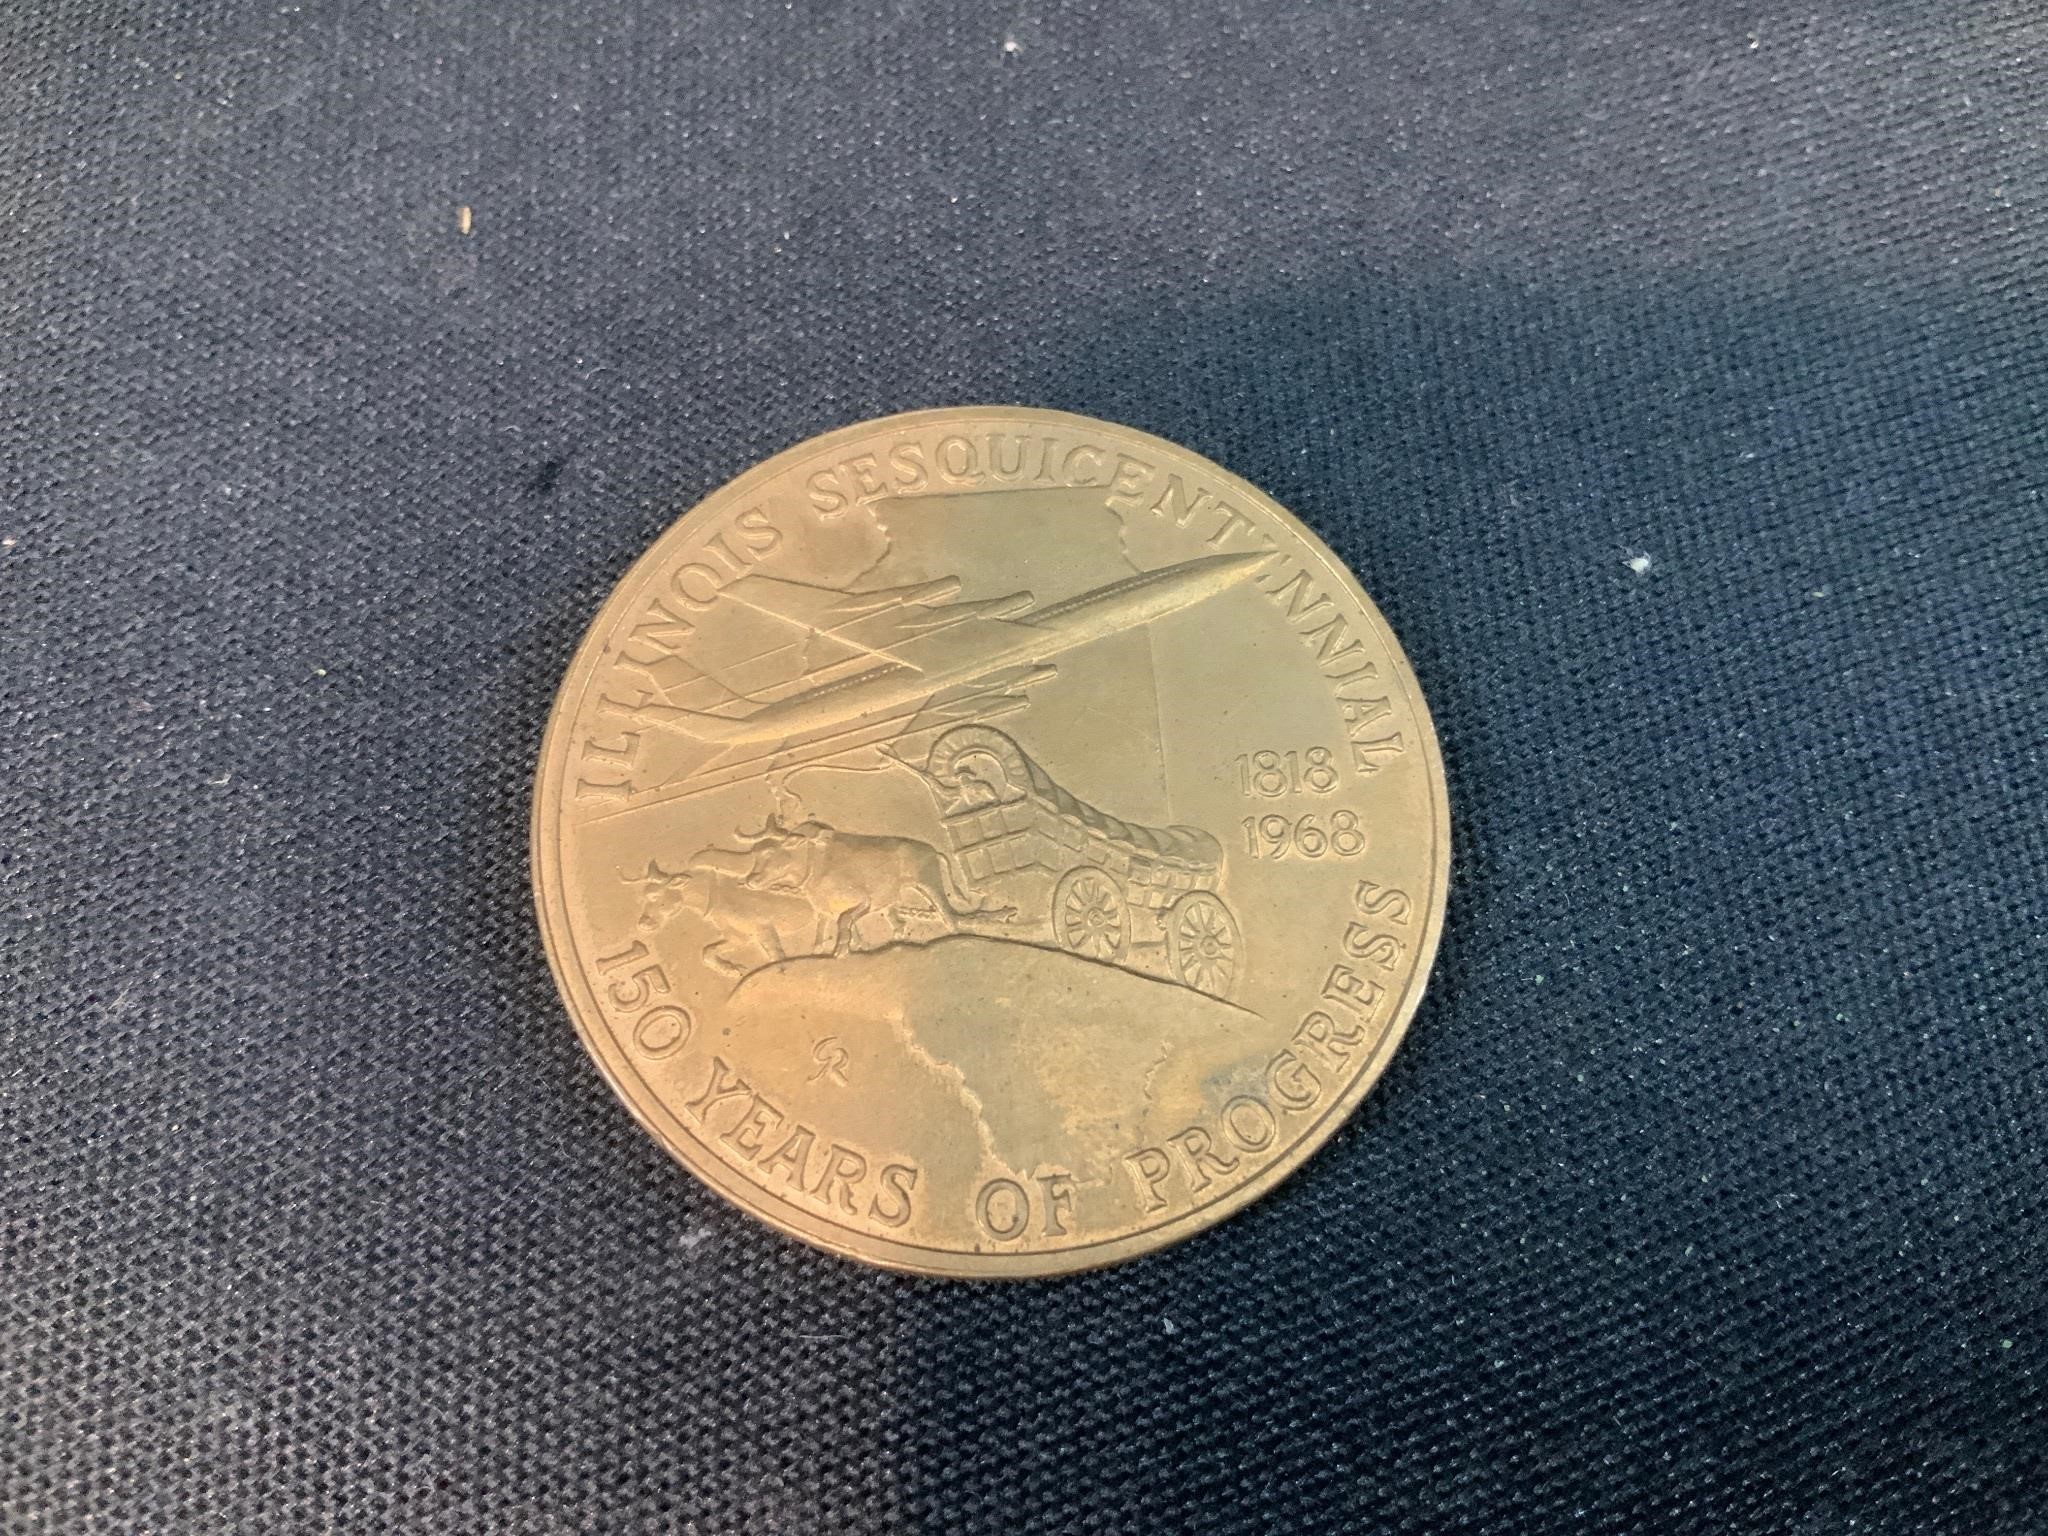 Illinois Sesquicentennial Commemorative Coin